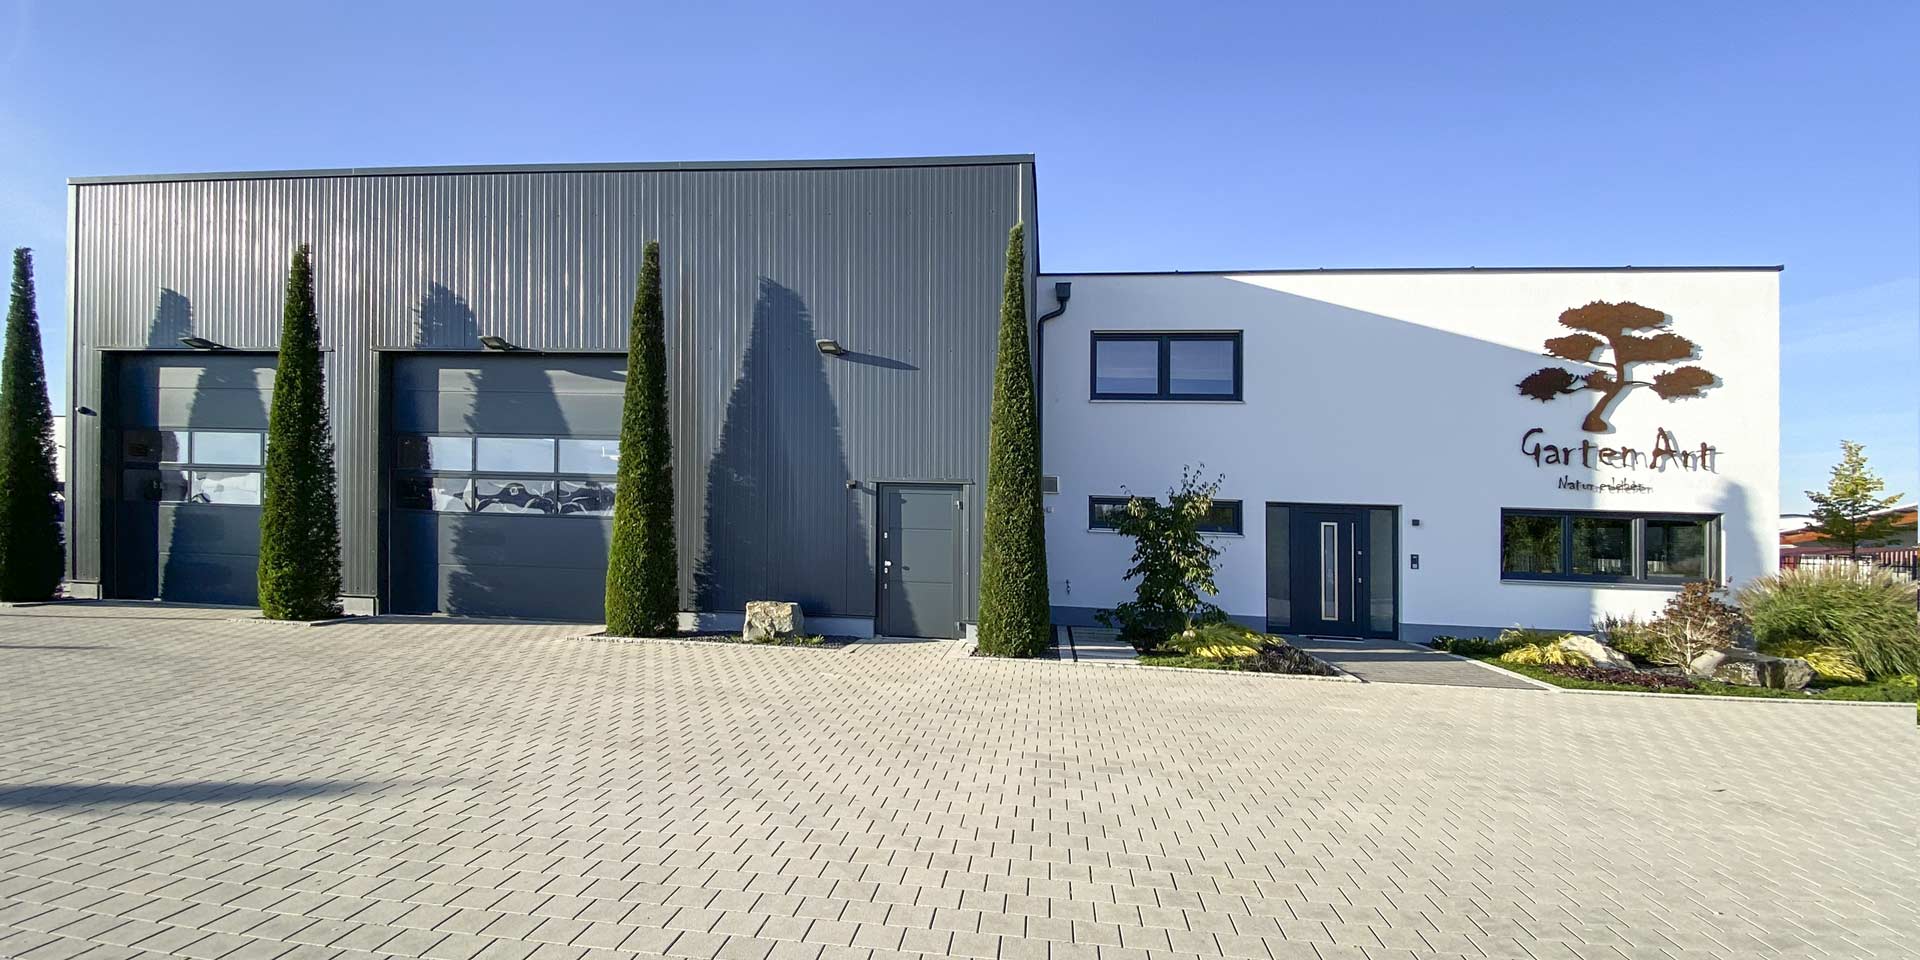 Betriebsgebäude in Wehringen - Garten Art Pfeiffer